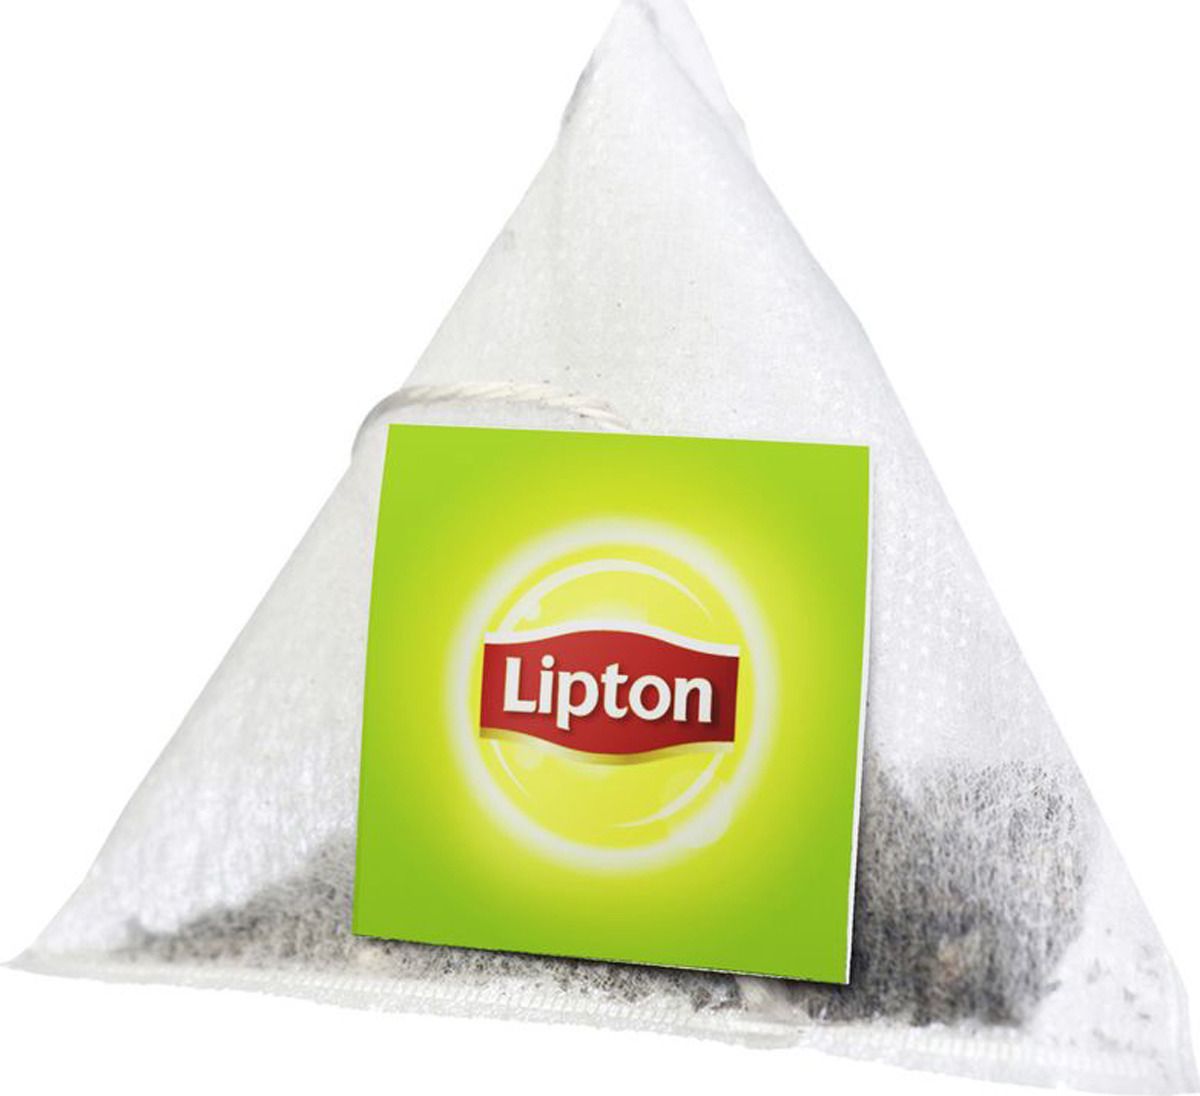    Lipton 